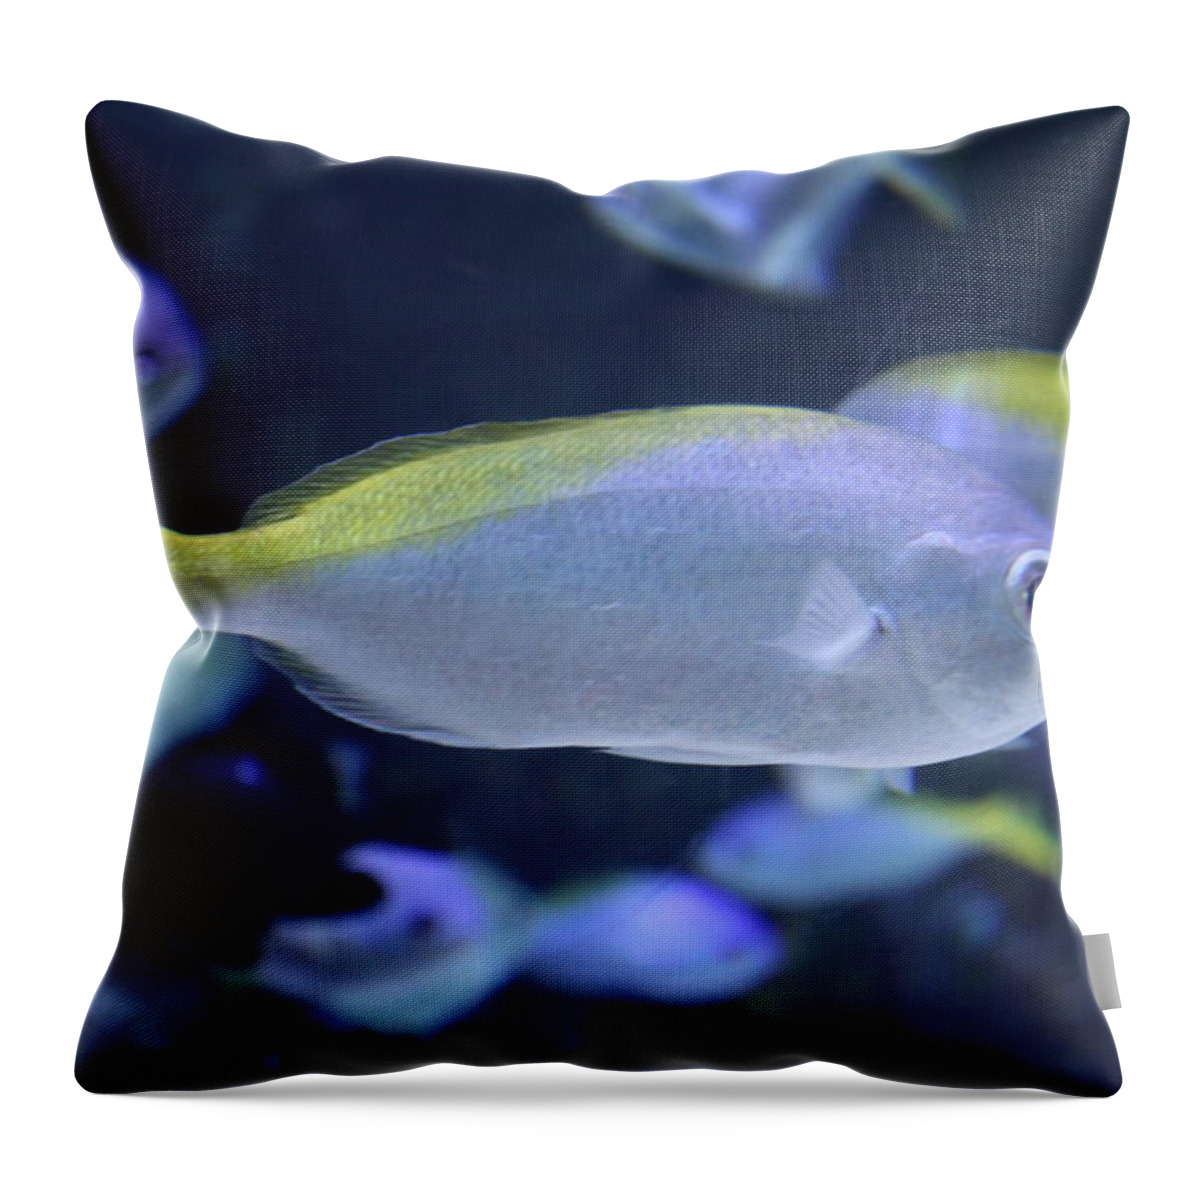 Aquarium Throw Pillow featuring the mixed media Tropical fish by Lauren Serene